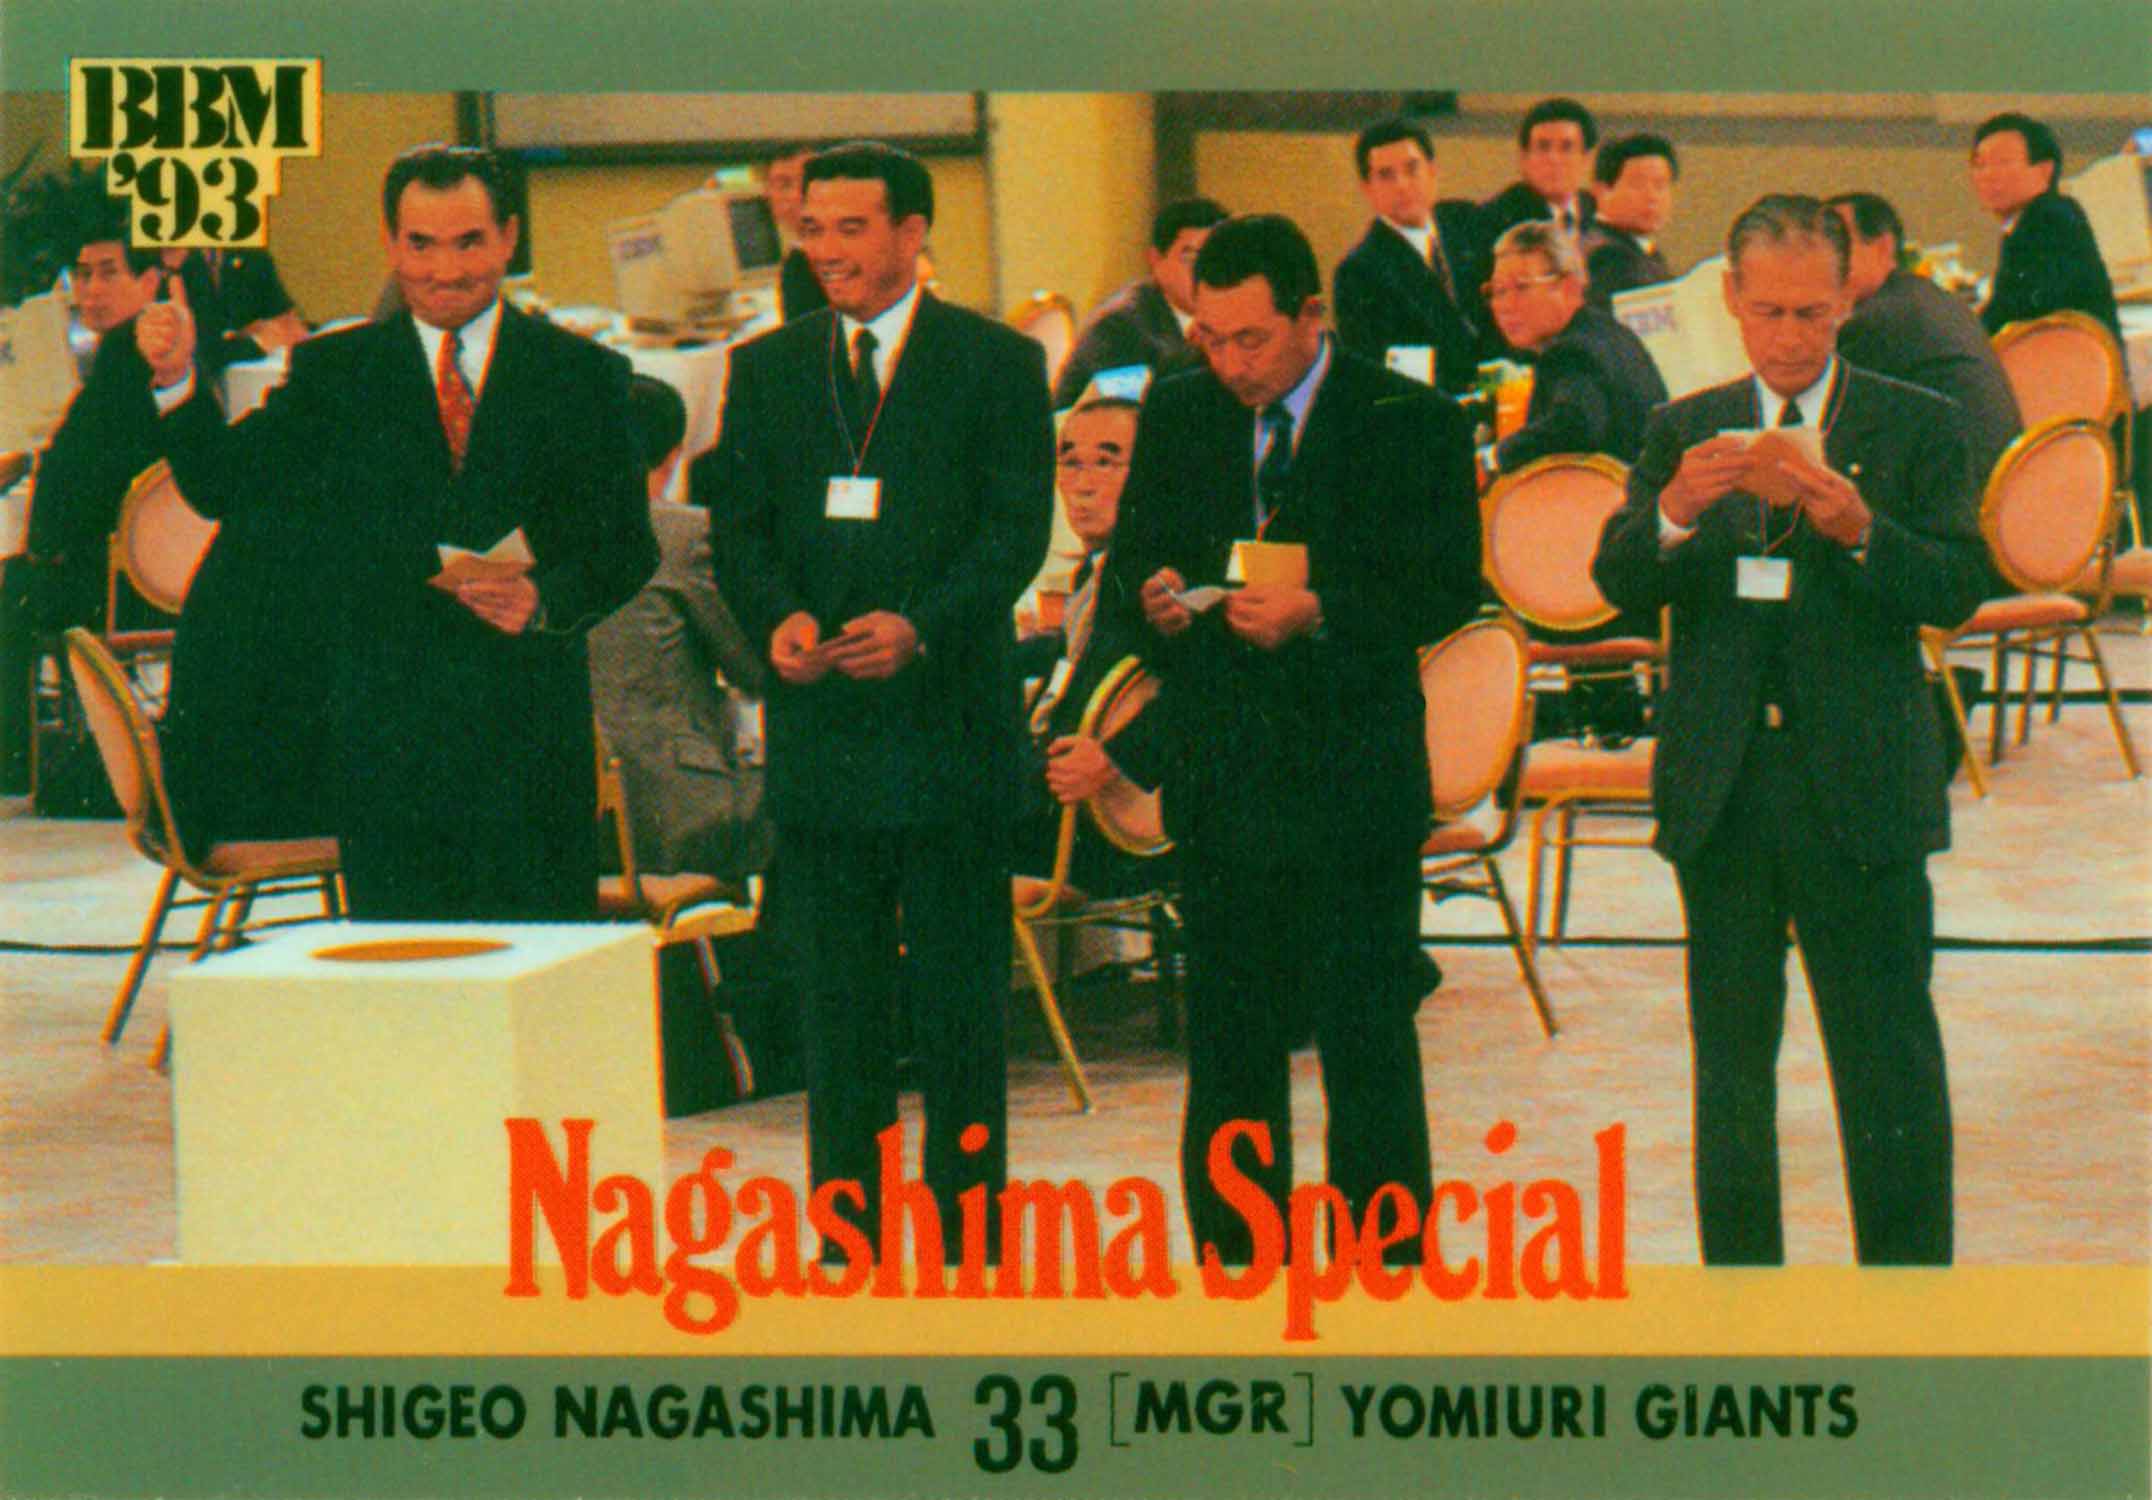 1993 BBM Japan Nagashima Special